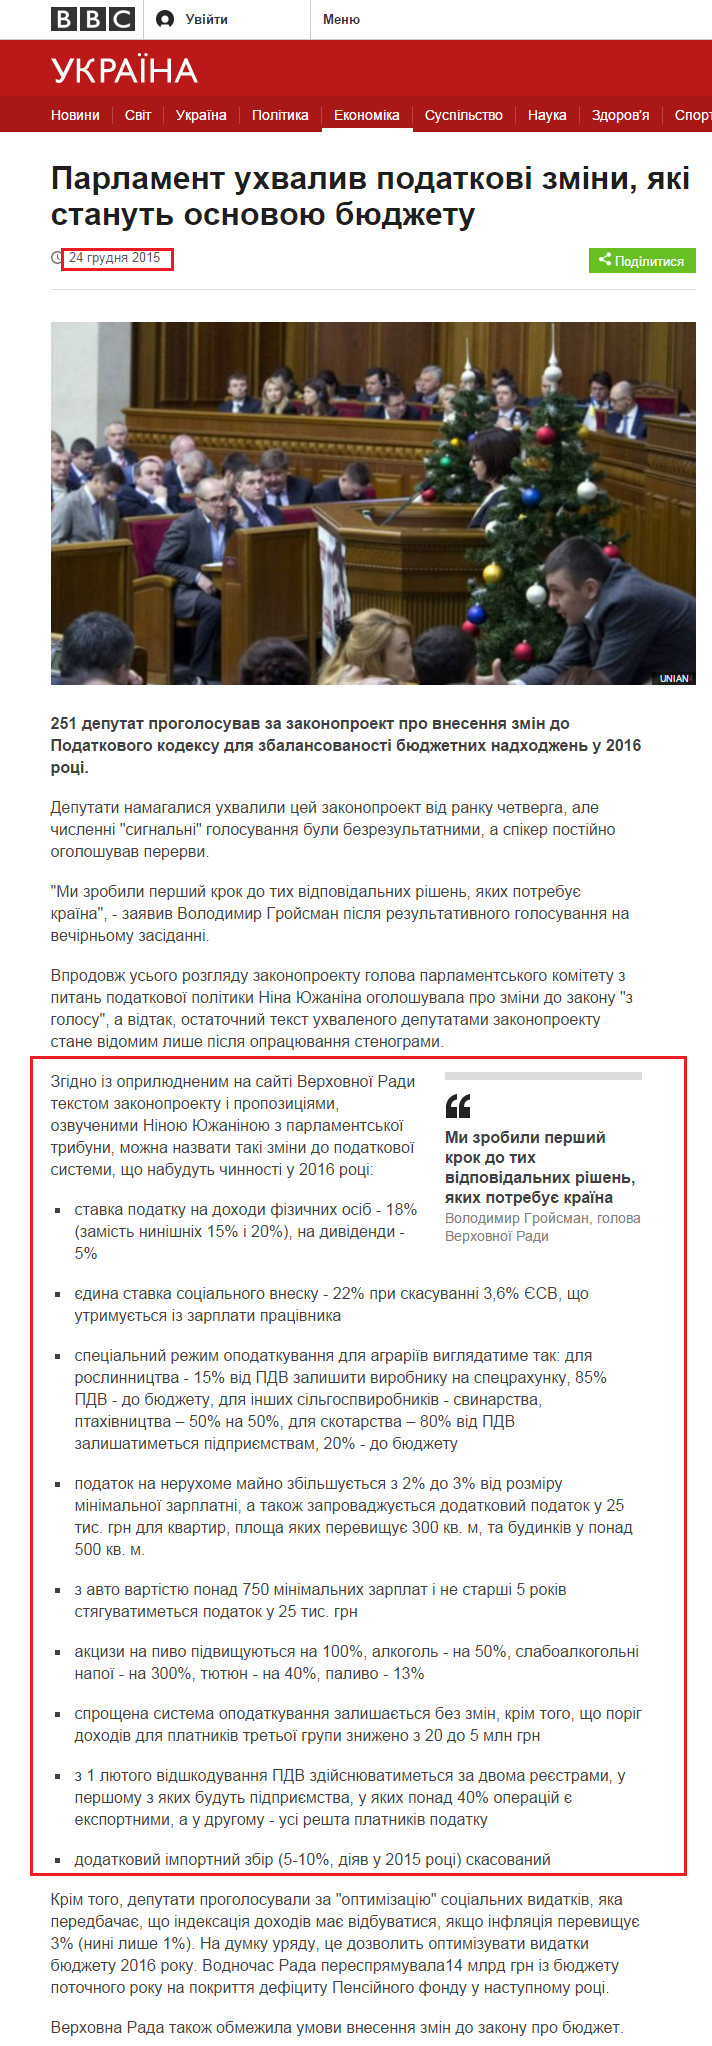 http://www.bbc.com/ukrainian/business/2015/12/151224_taxes_budget_az